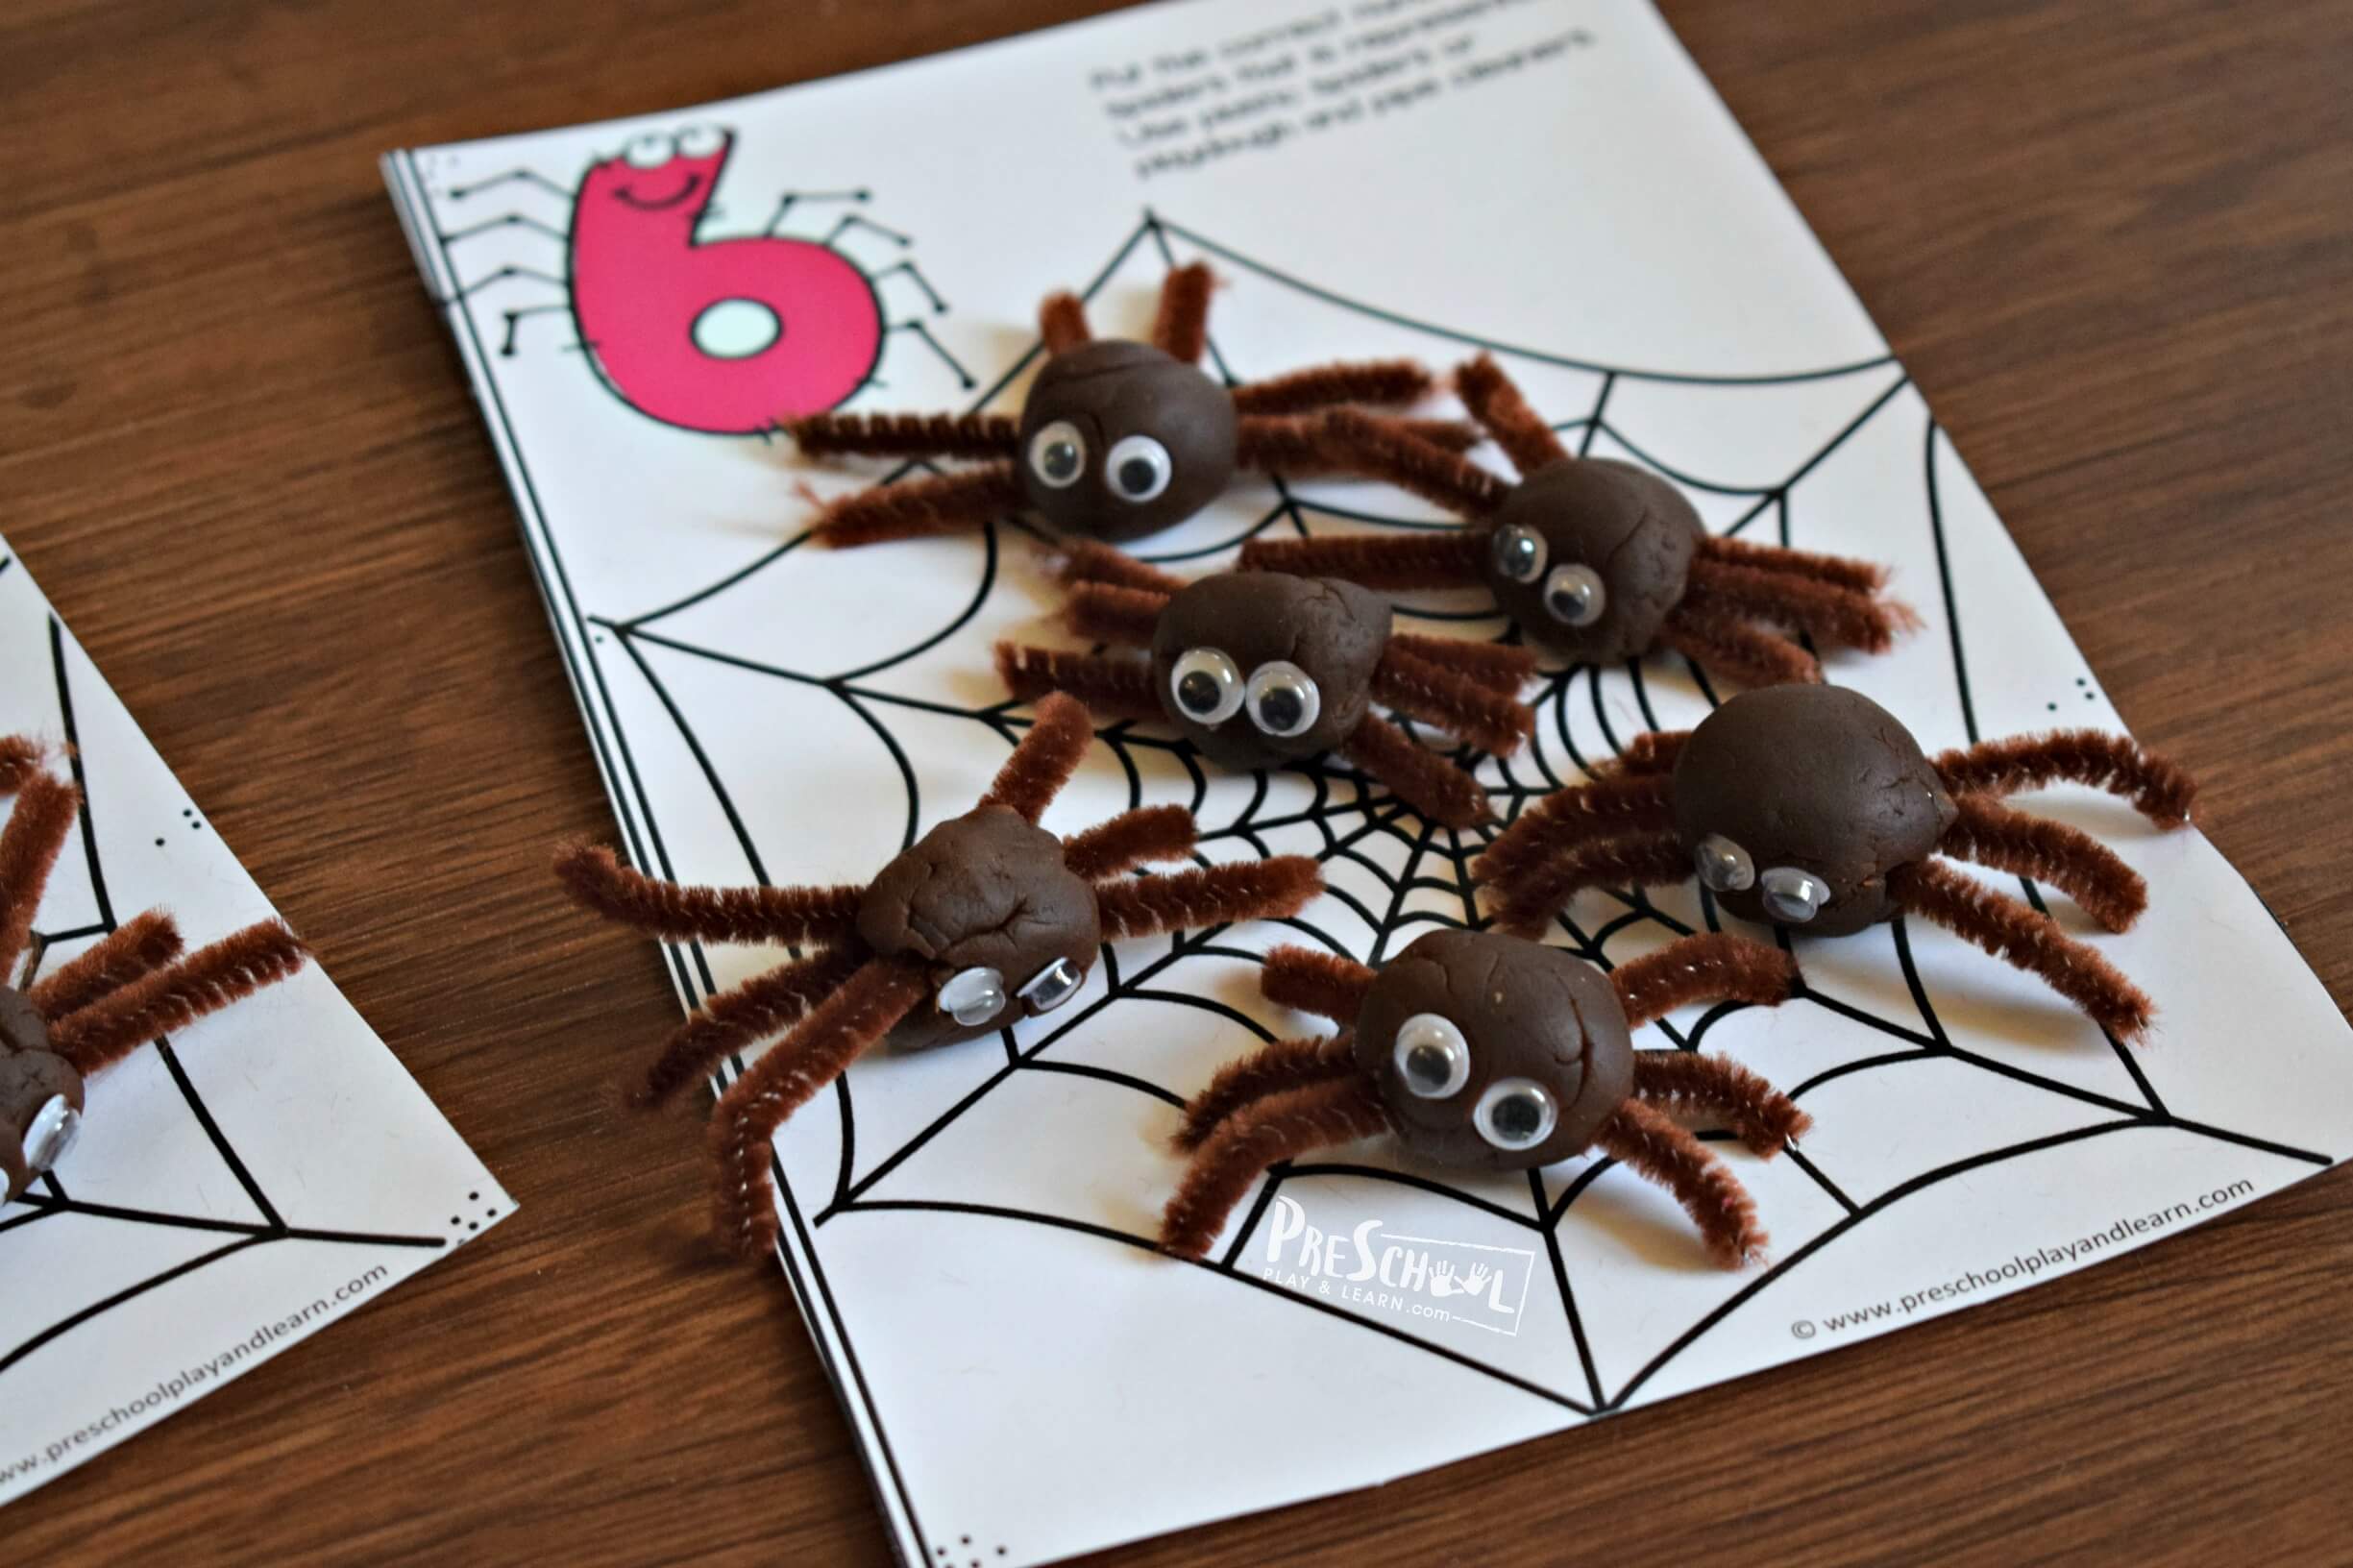 Spiders Preschool Unit - Play to Learn Preschool